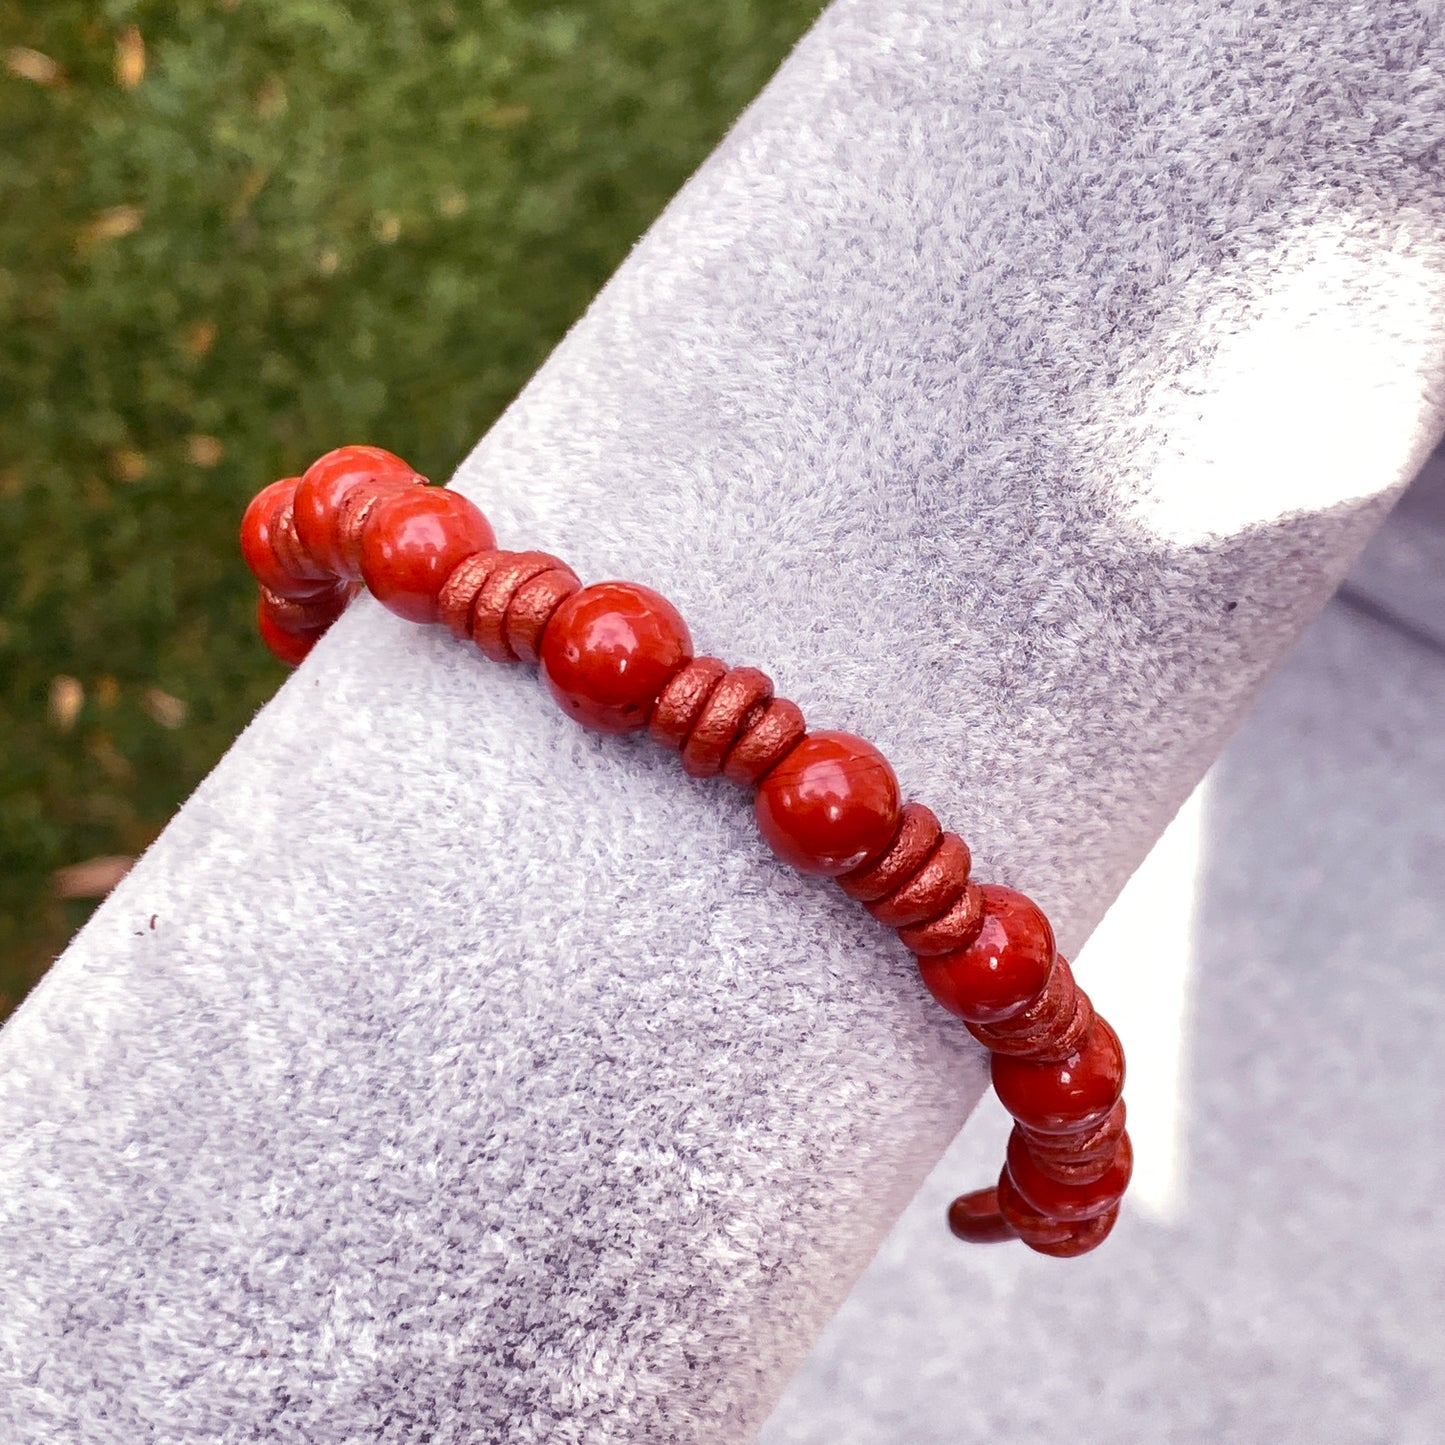 Red Jasper and leather bracelet